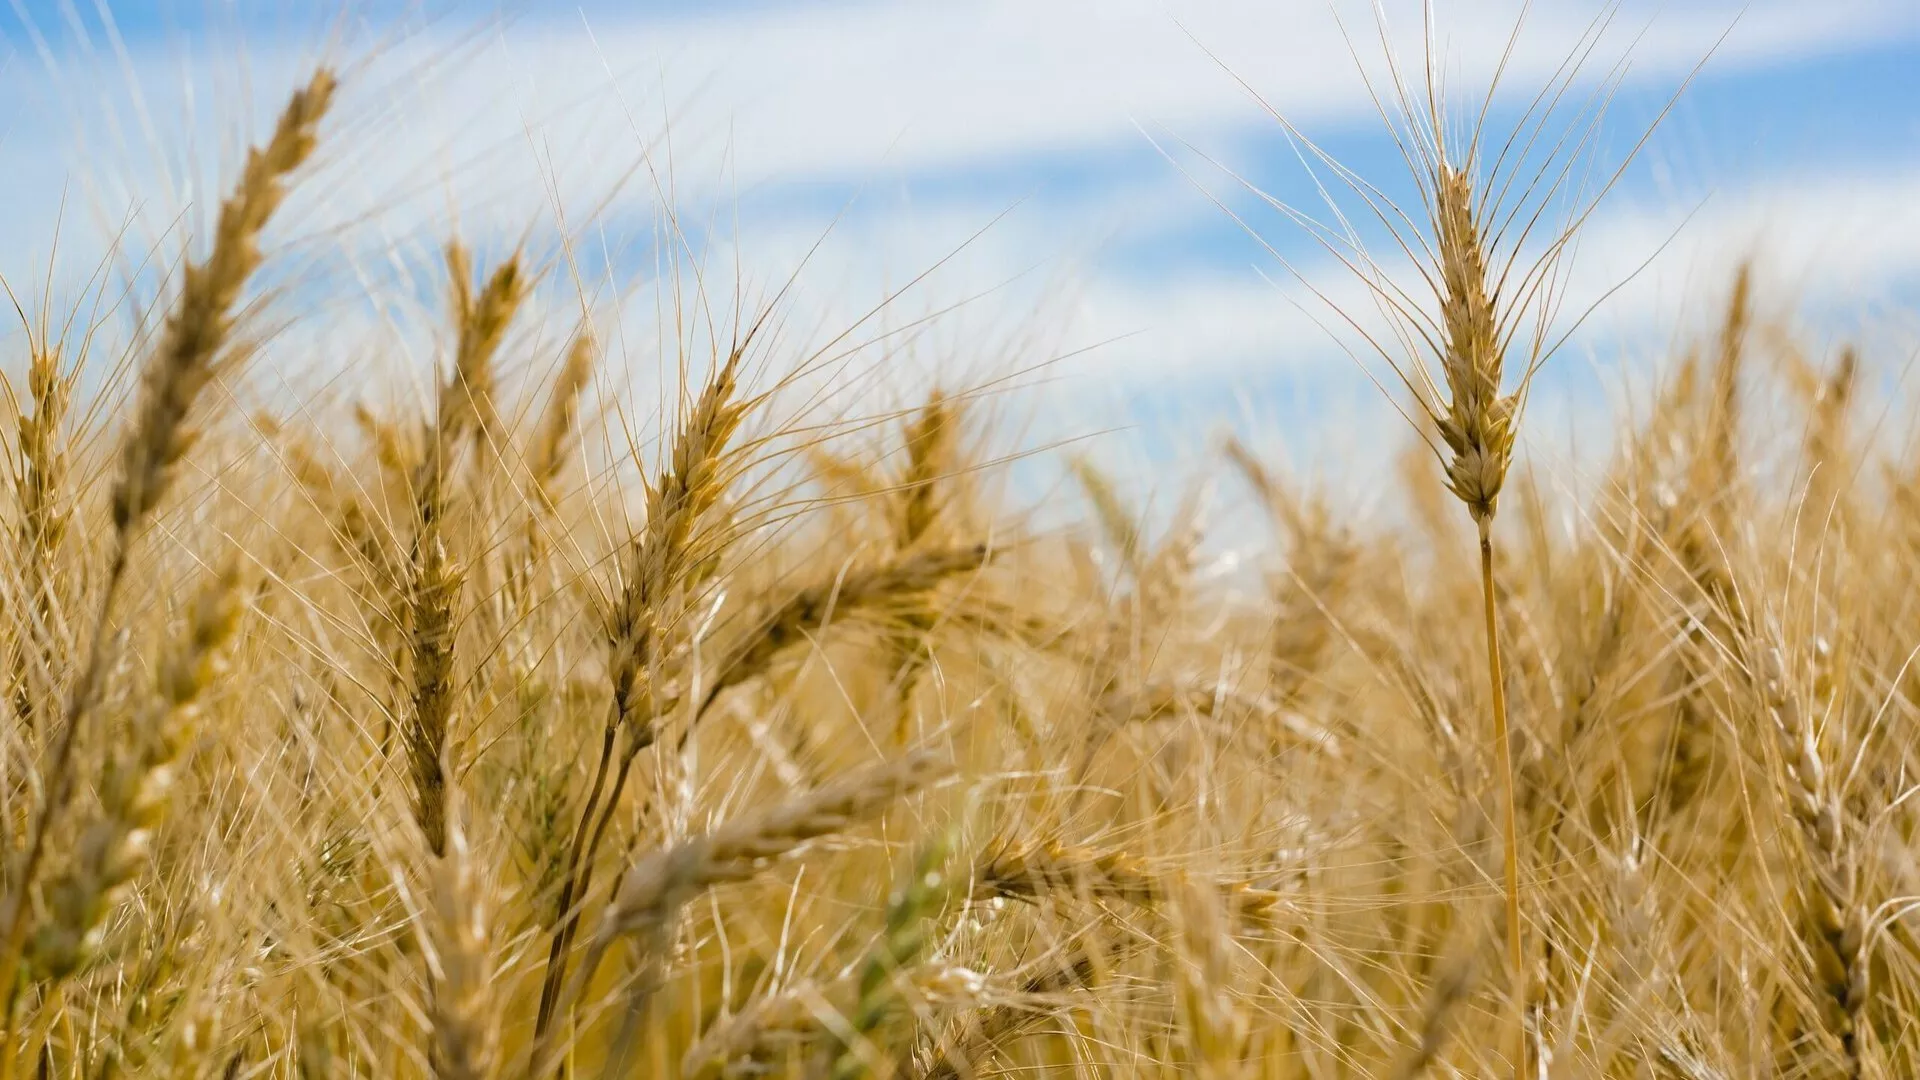 Seasonal funding (Summer wheat & winter barley)